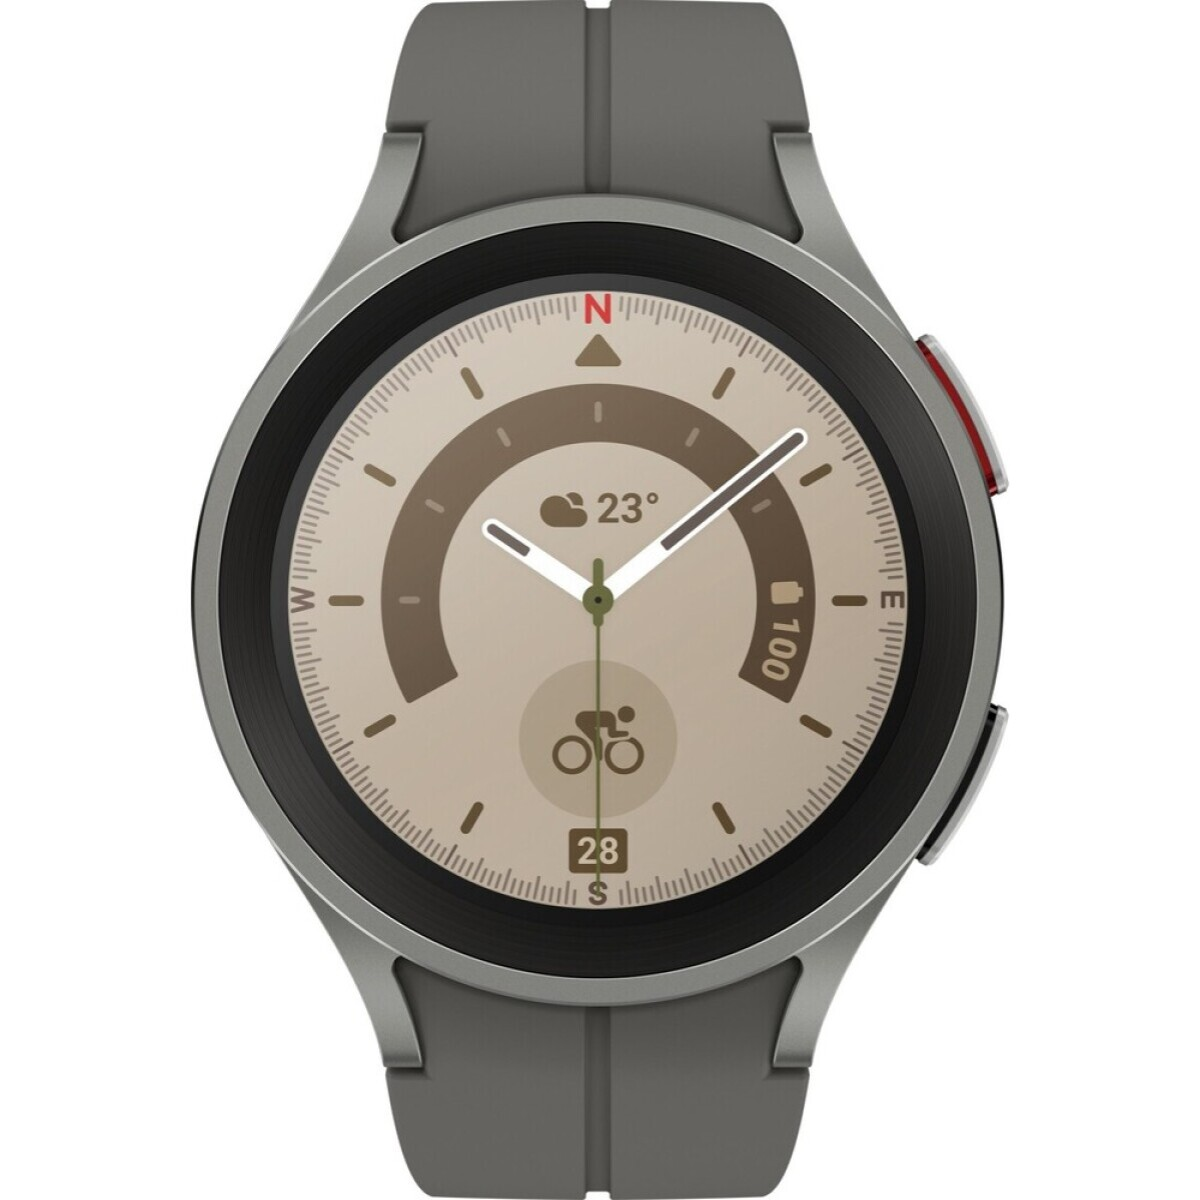 R920 5 Pro Titan Smart titanium Watch Galaxy Watch SAMSUNG WiFi Kunststoff, gray